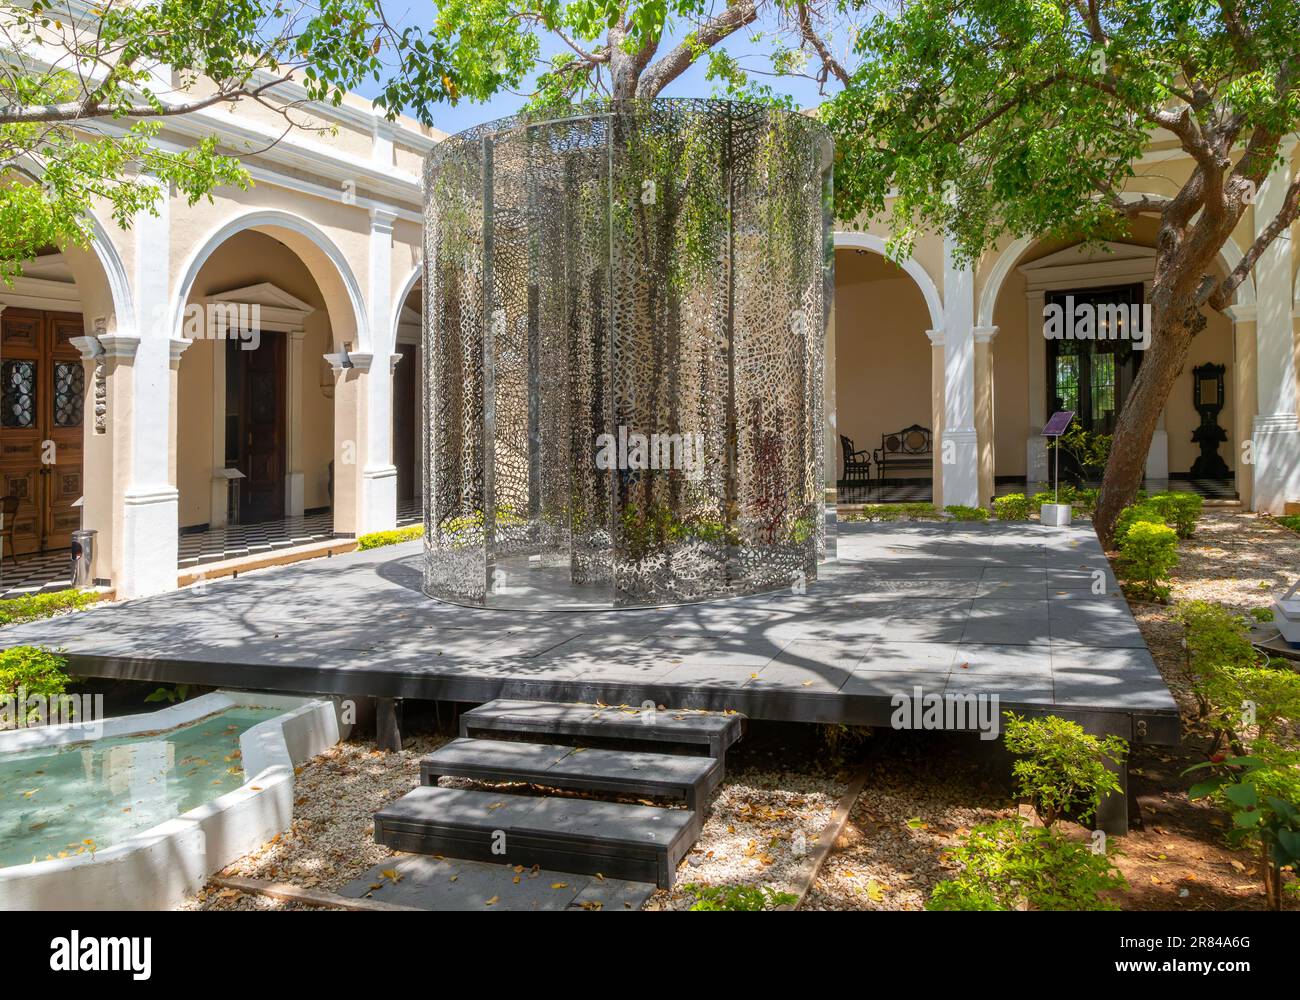 Art exhibition 'Atlas' by Jan Hendrix, artwork in central courtyard of palace of Casa de Montejo, Merida, Yucatan State, Mexico Stock Photo